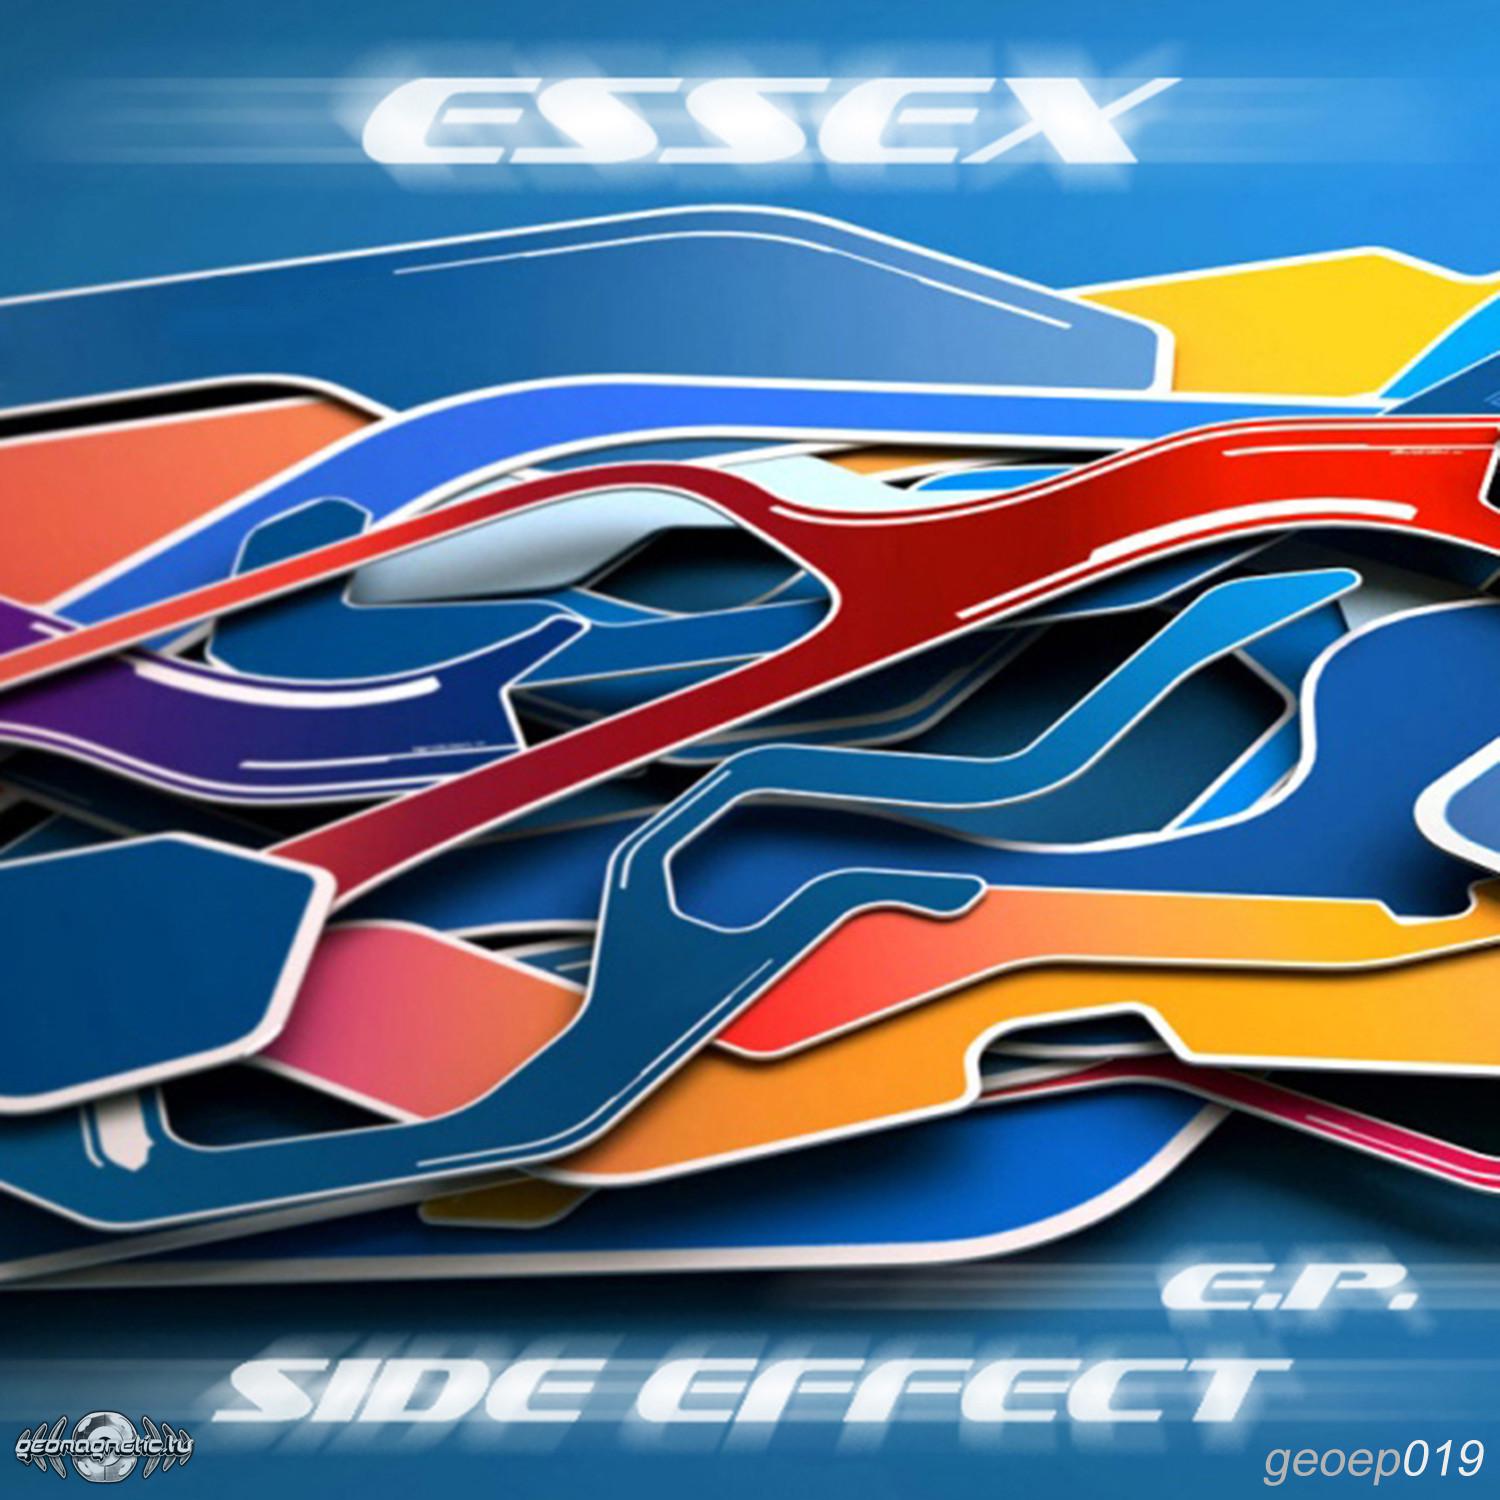 Essex - Side Effect EP